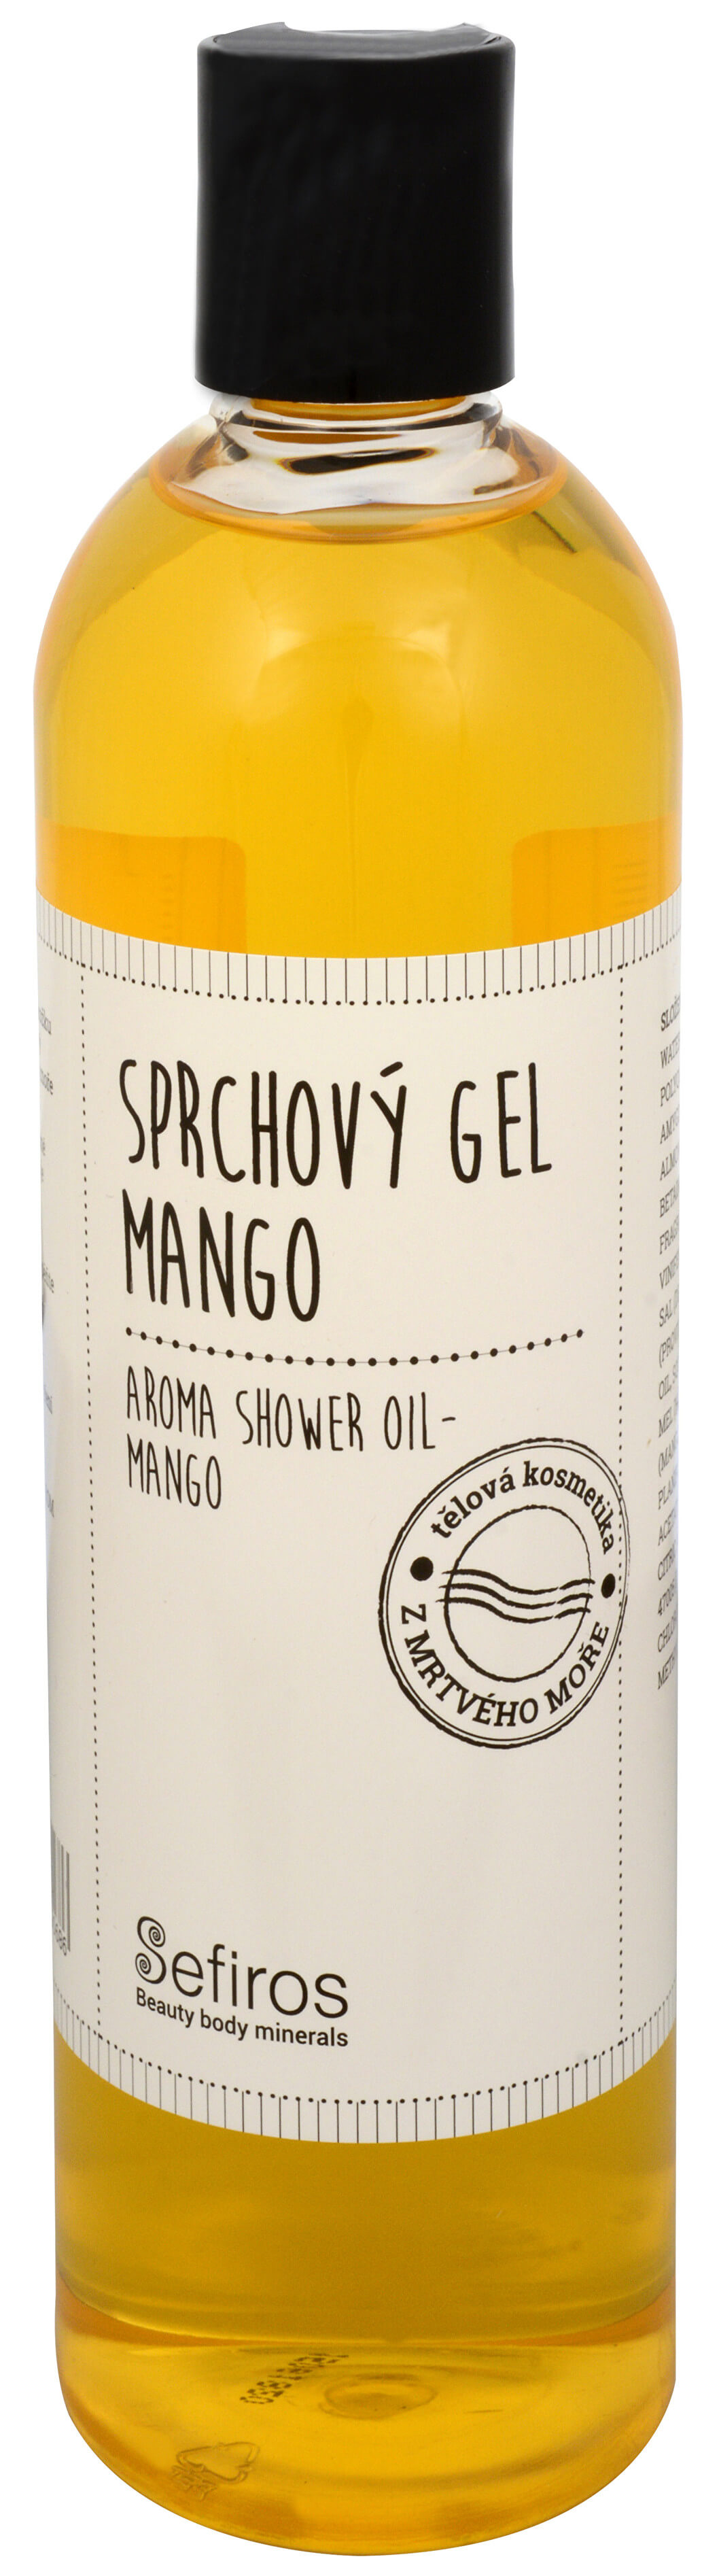 Zobrazit detail výrobku Sefiross Sprchový gel Mango (Aroma Shower Oil) 400 ml